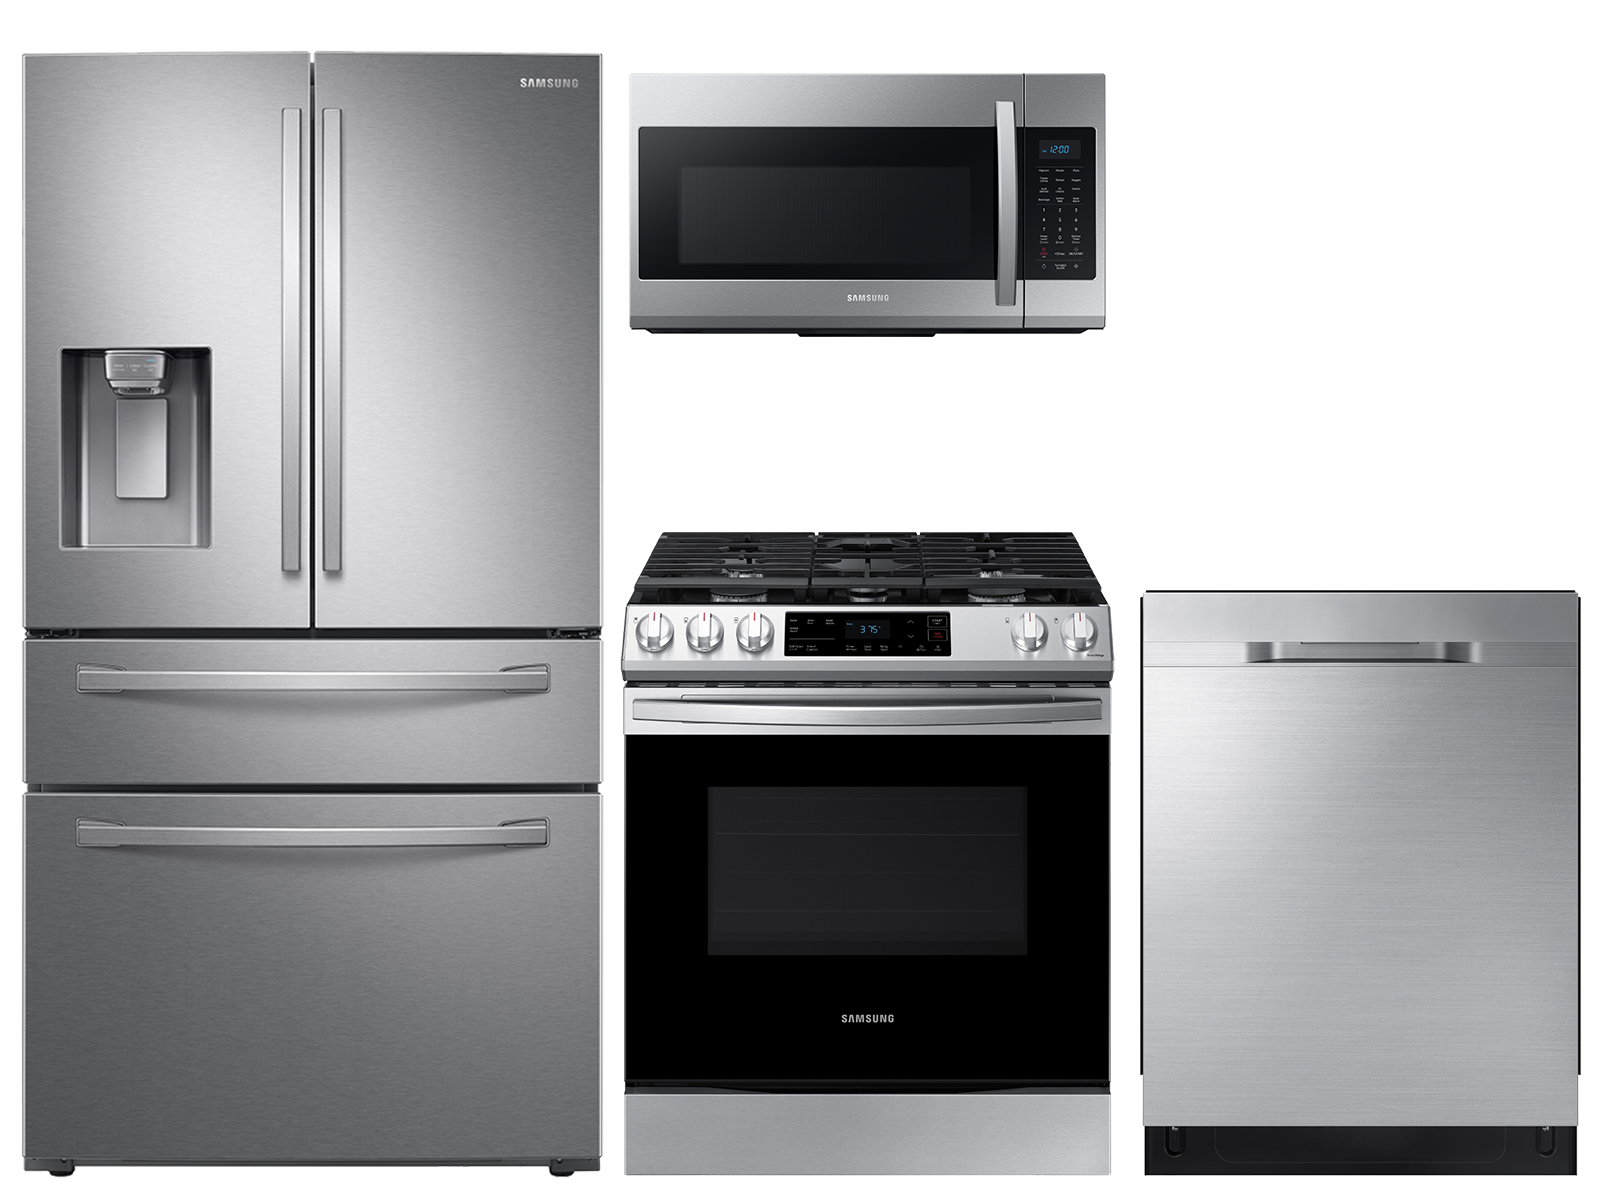 Samsung 28 cu. ft. 4-door refrigerator, gas range, microwave and dishwasher package(BNDL-1612902654943)